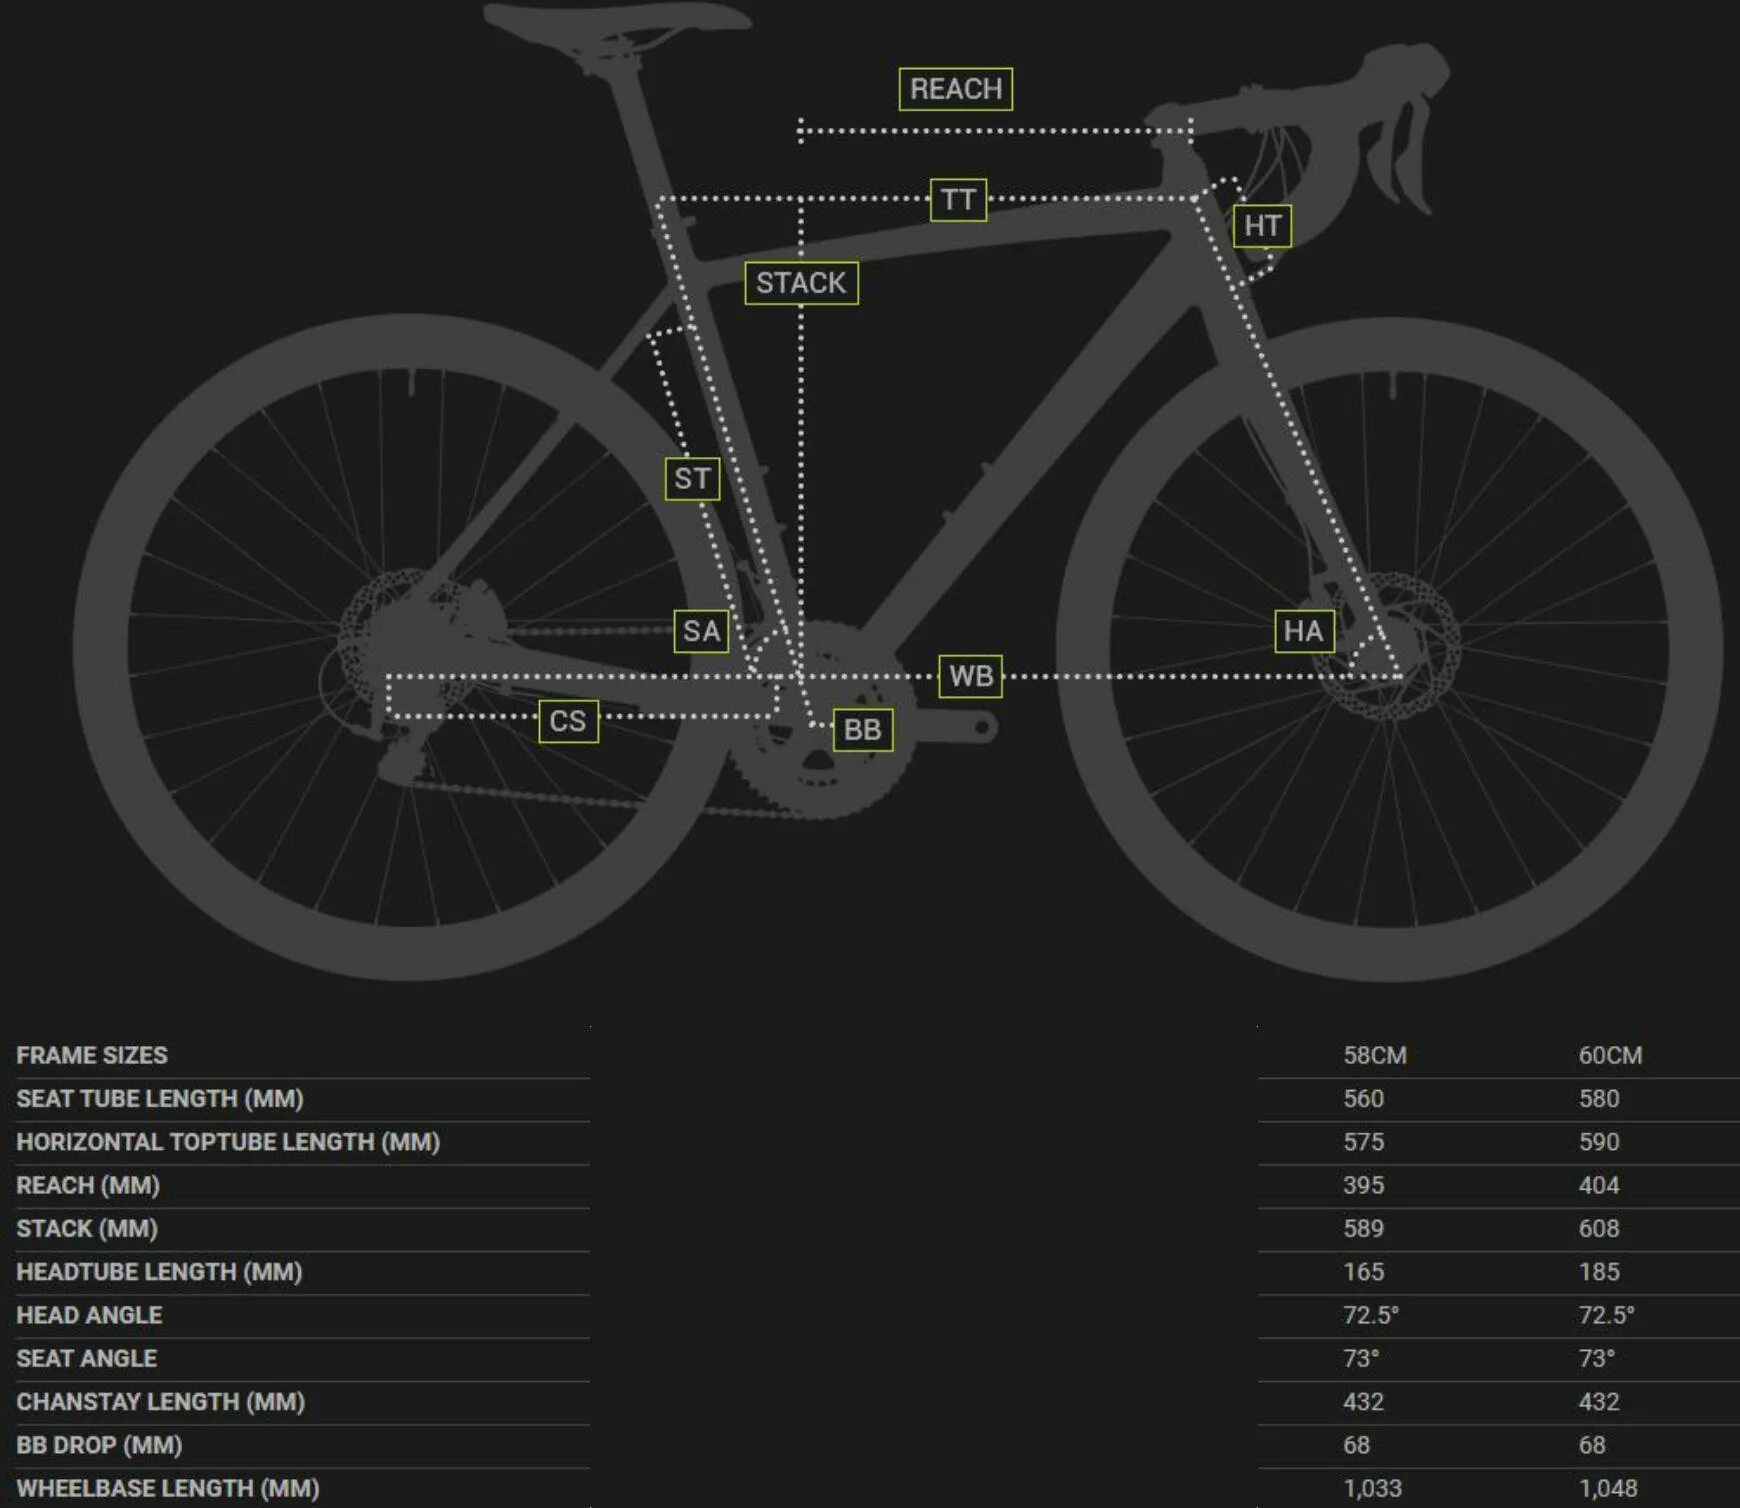 Stack велосипеда. Размер рамы для гревела. Формат 5221 велосипед геометрия. Геометрия велосипеда программа. Bike geometry